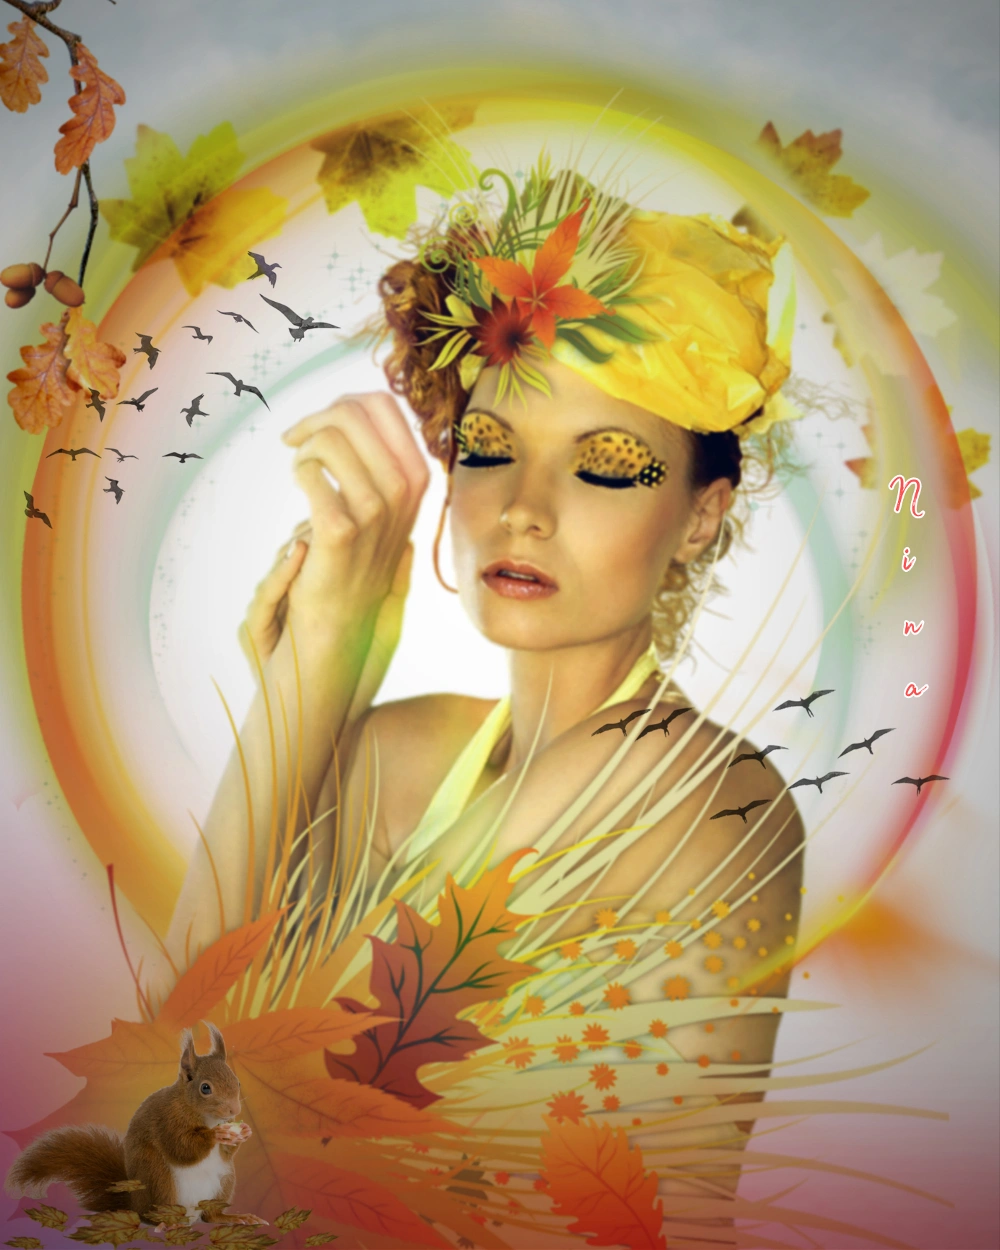 #freetoedit#
#background#wallpaper#effect#colors# #girl#beatiful#autumn#leaves#picsart# #picsartru#heypicsart#aesthetic# #madewithpicsart#myedit#